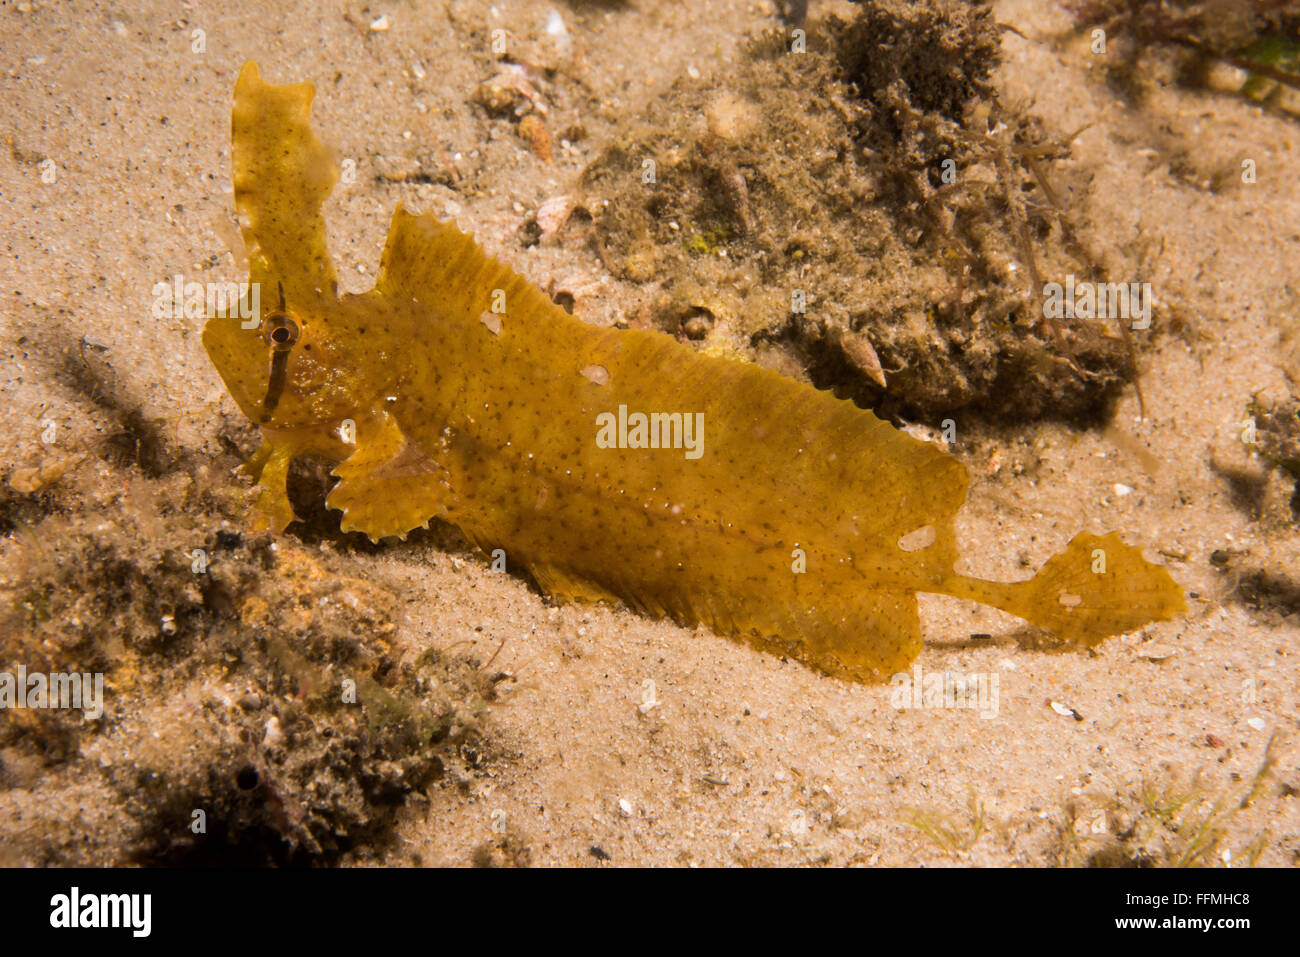 Yellow Crested Weedfish (Cristiceps aurantiacus) Stock Photo